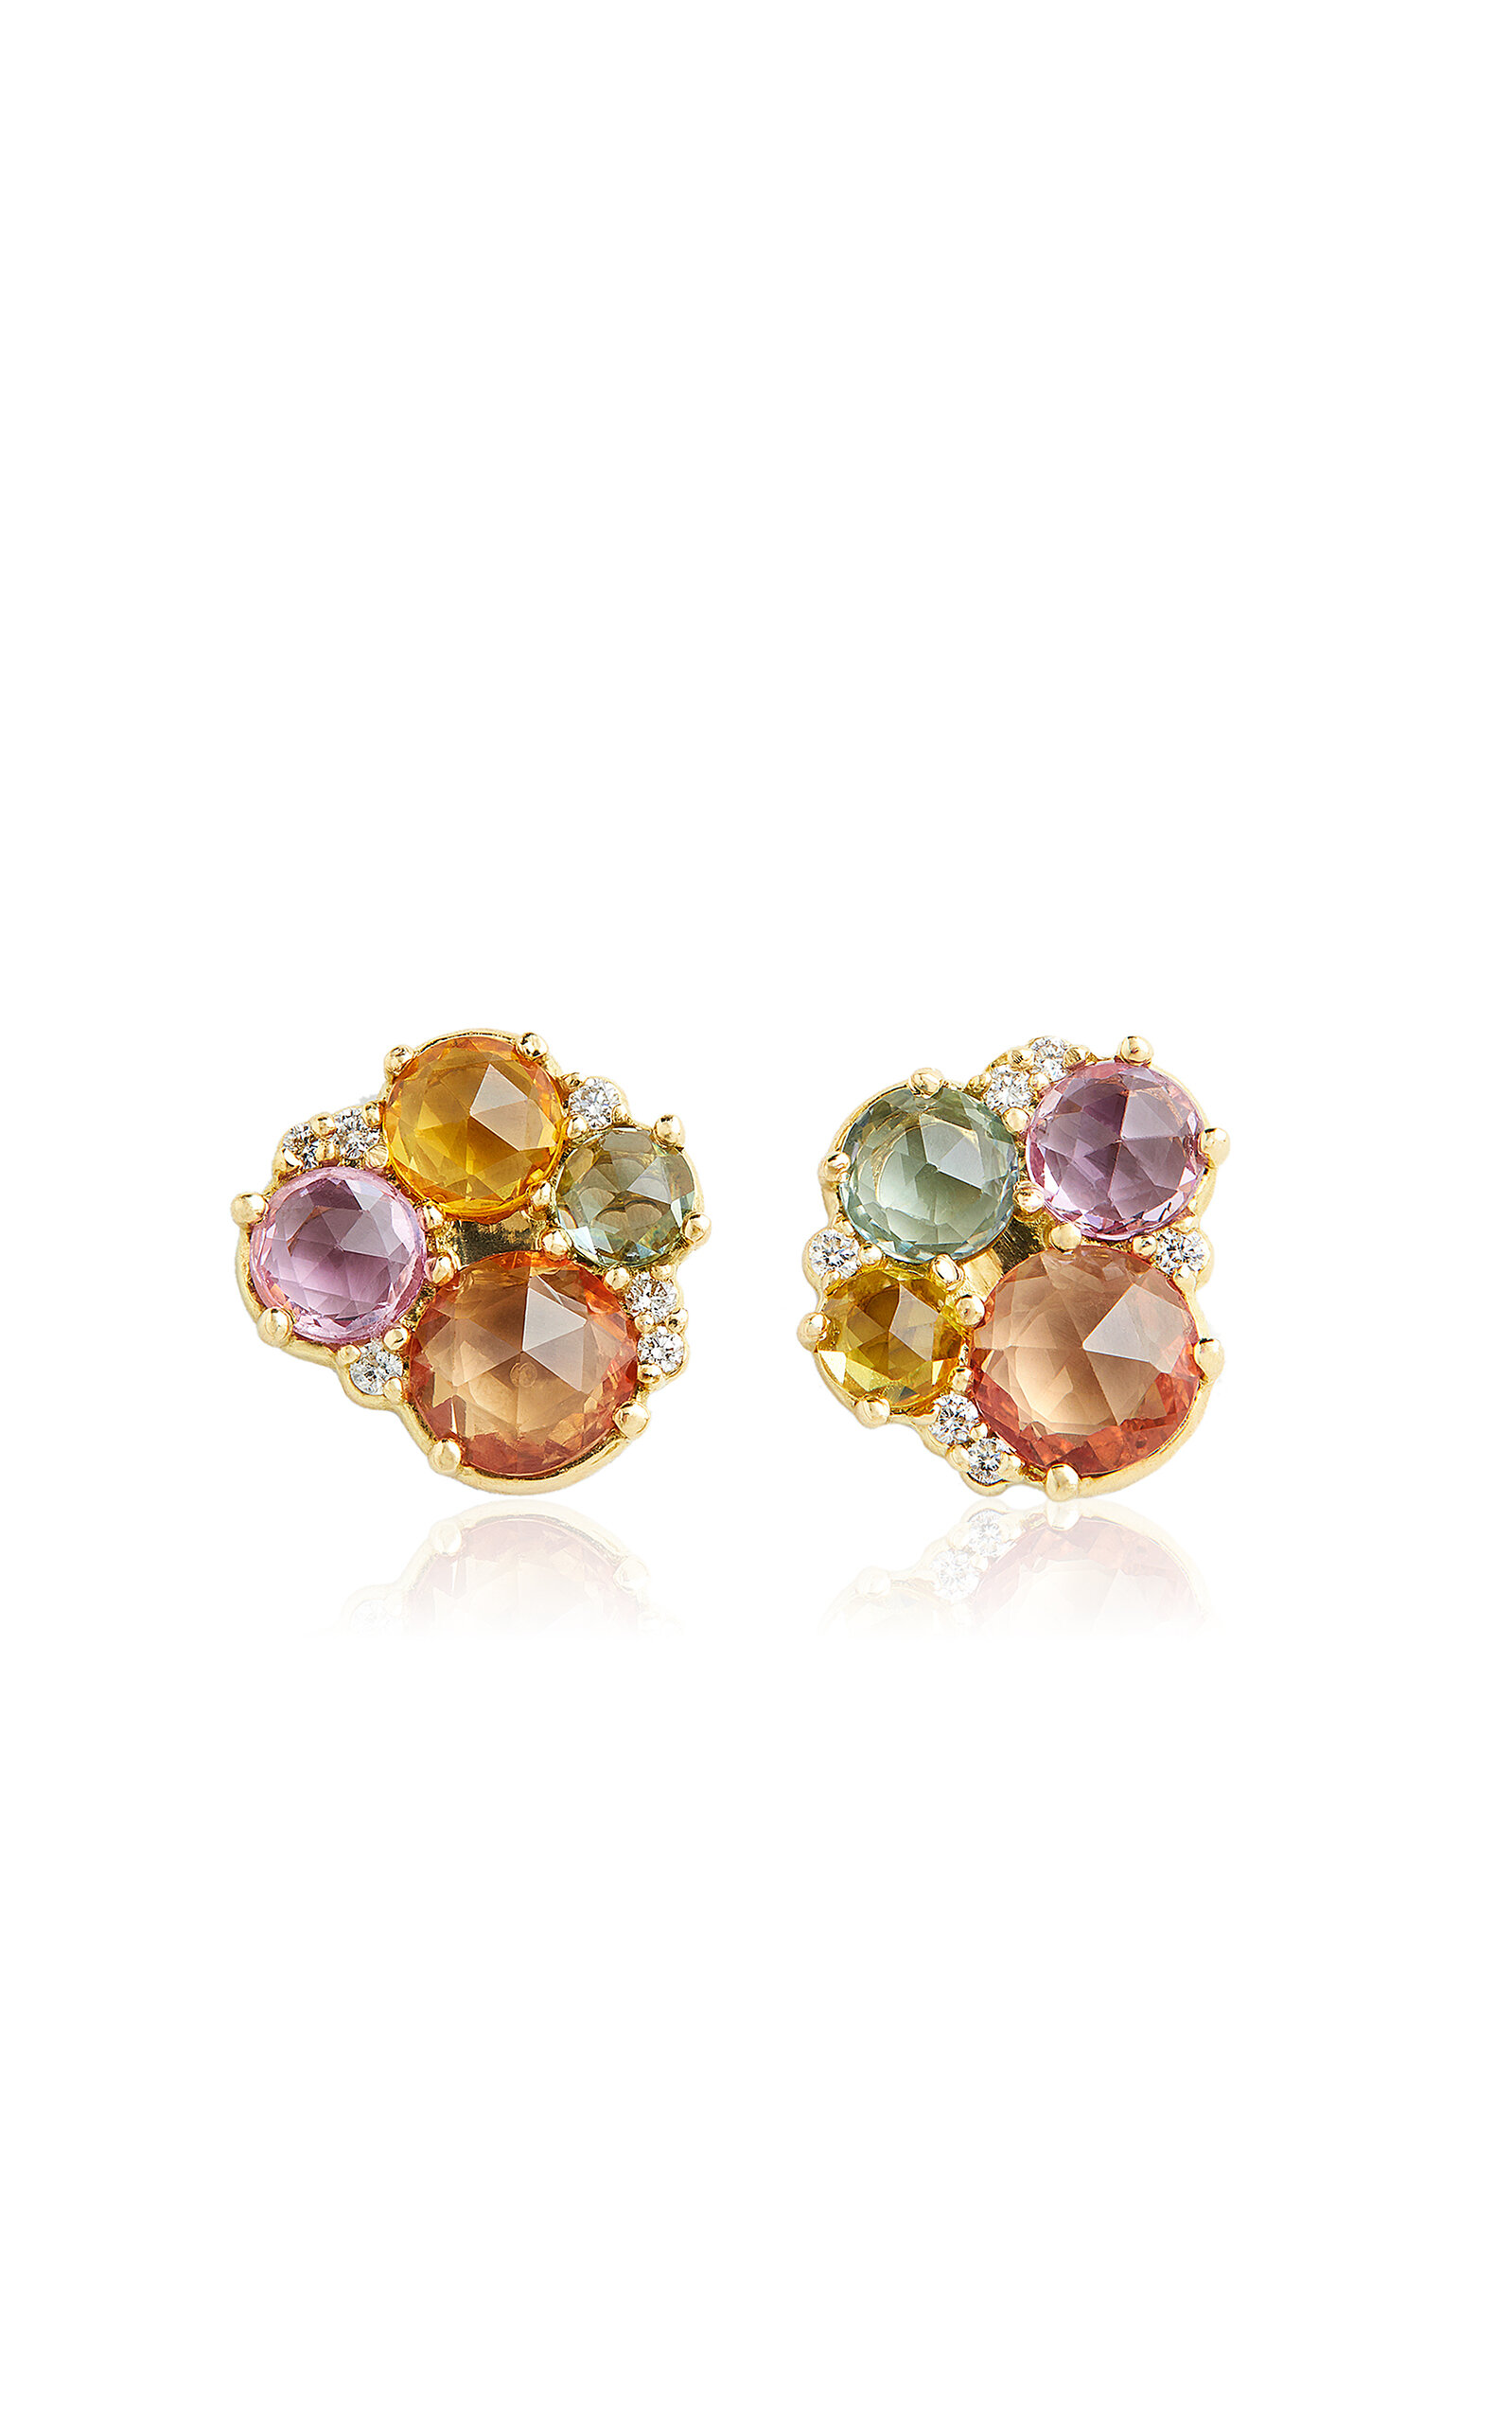 18k Yellow GoldÂ Sapphire and Diamond Earrings